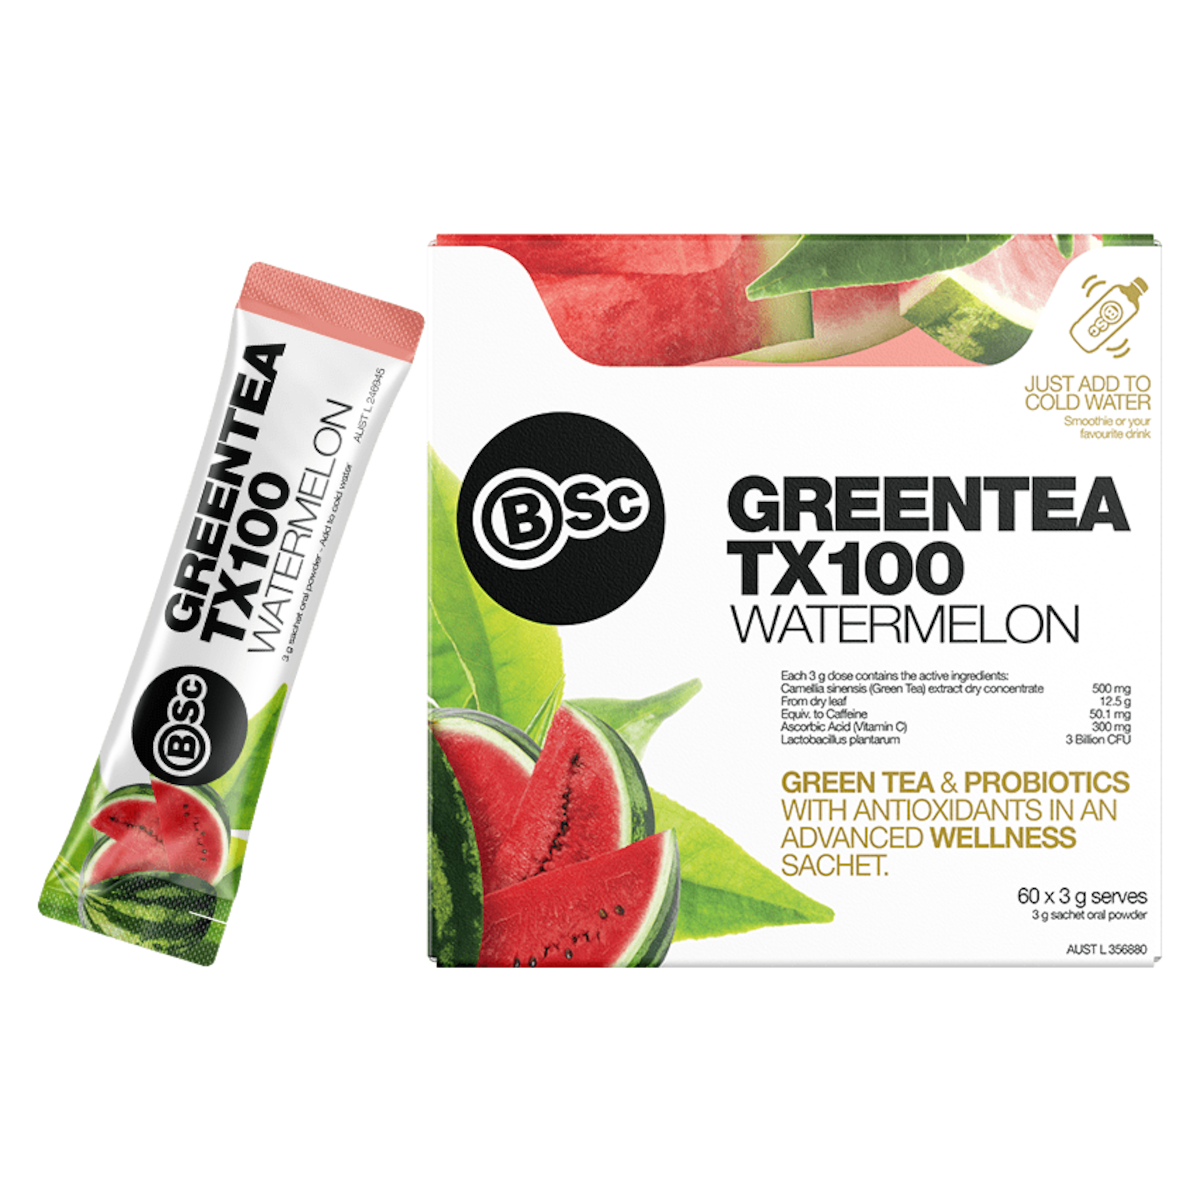 BSc Body Science Green Tea TX100 Watermelon 60 x 3g Sachets Australia